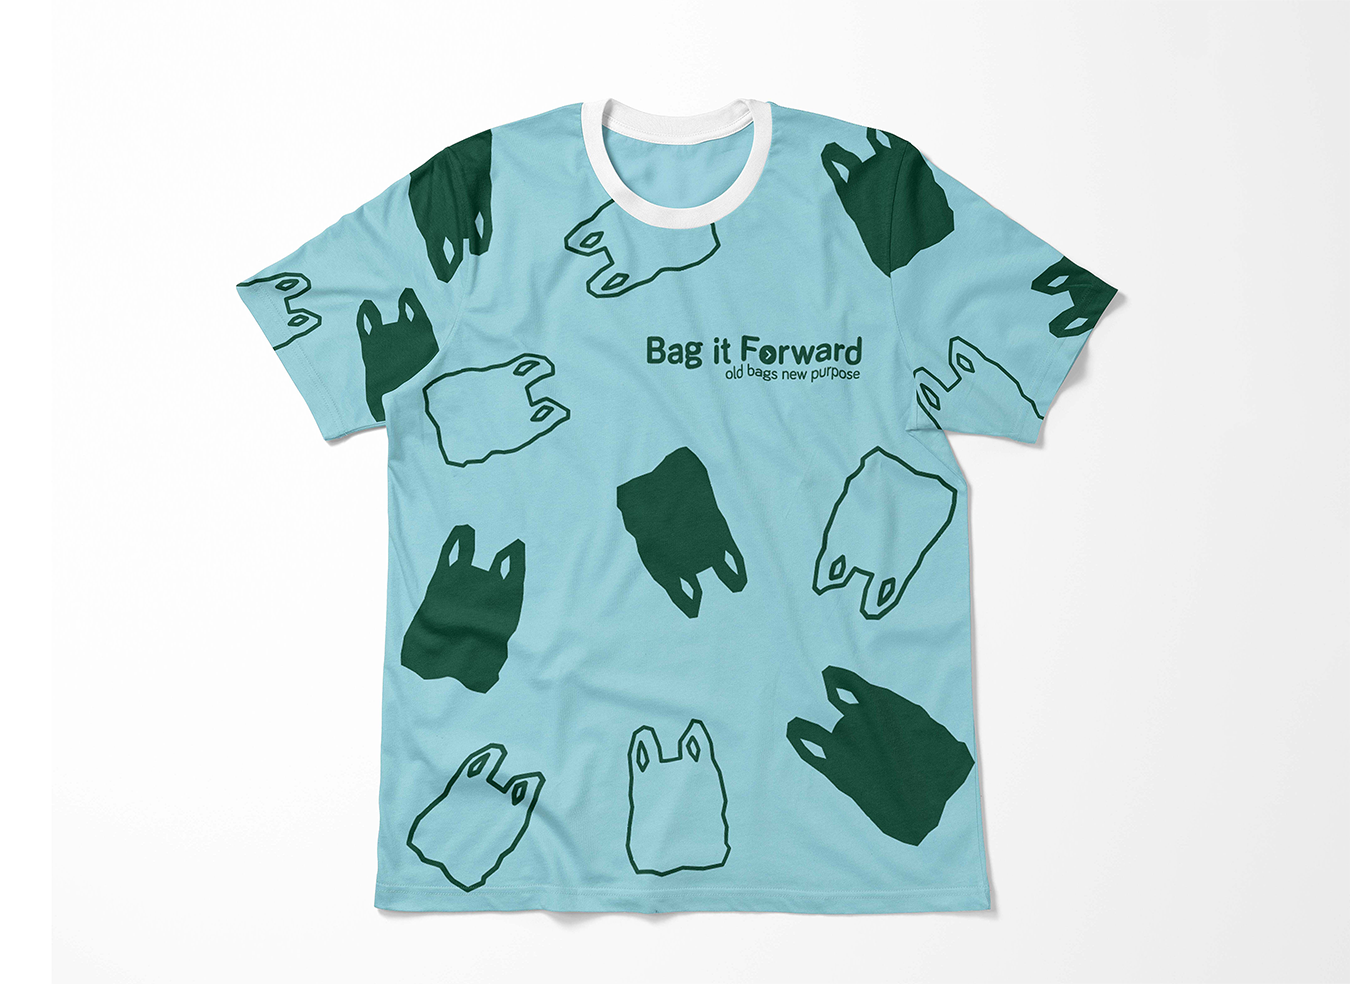 Bag it Forward branded t-shirt